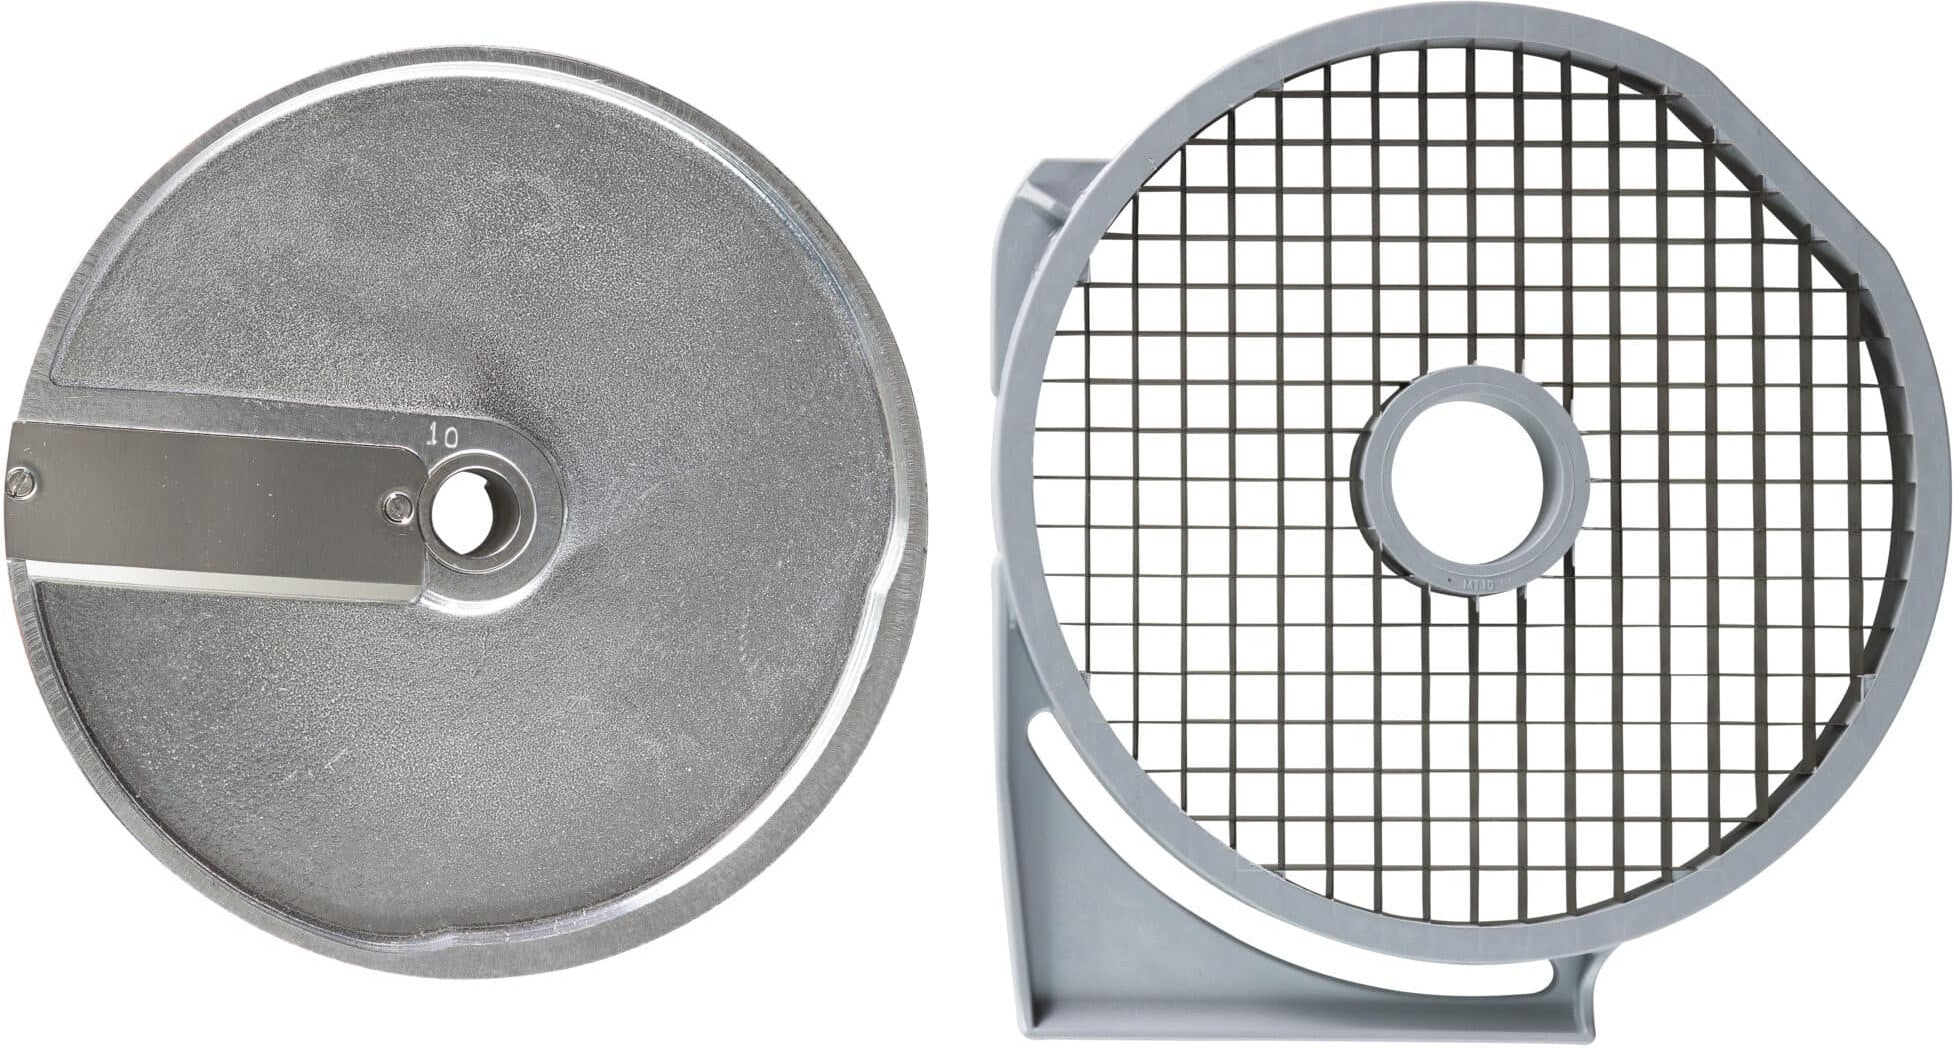 DITO SAMA - 10 x 10 x 10 mm Slicing Disc & Grid - 650112